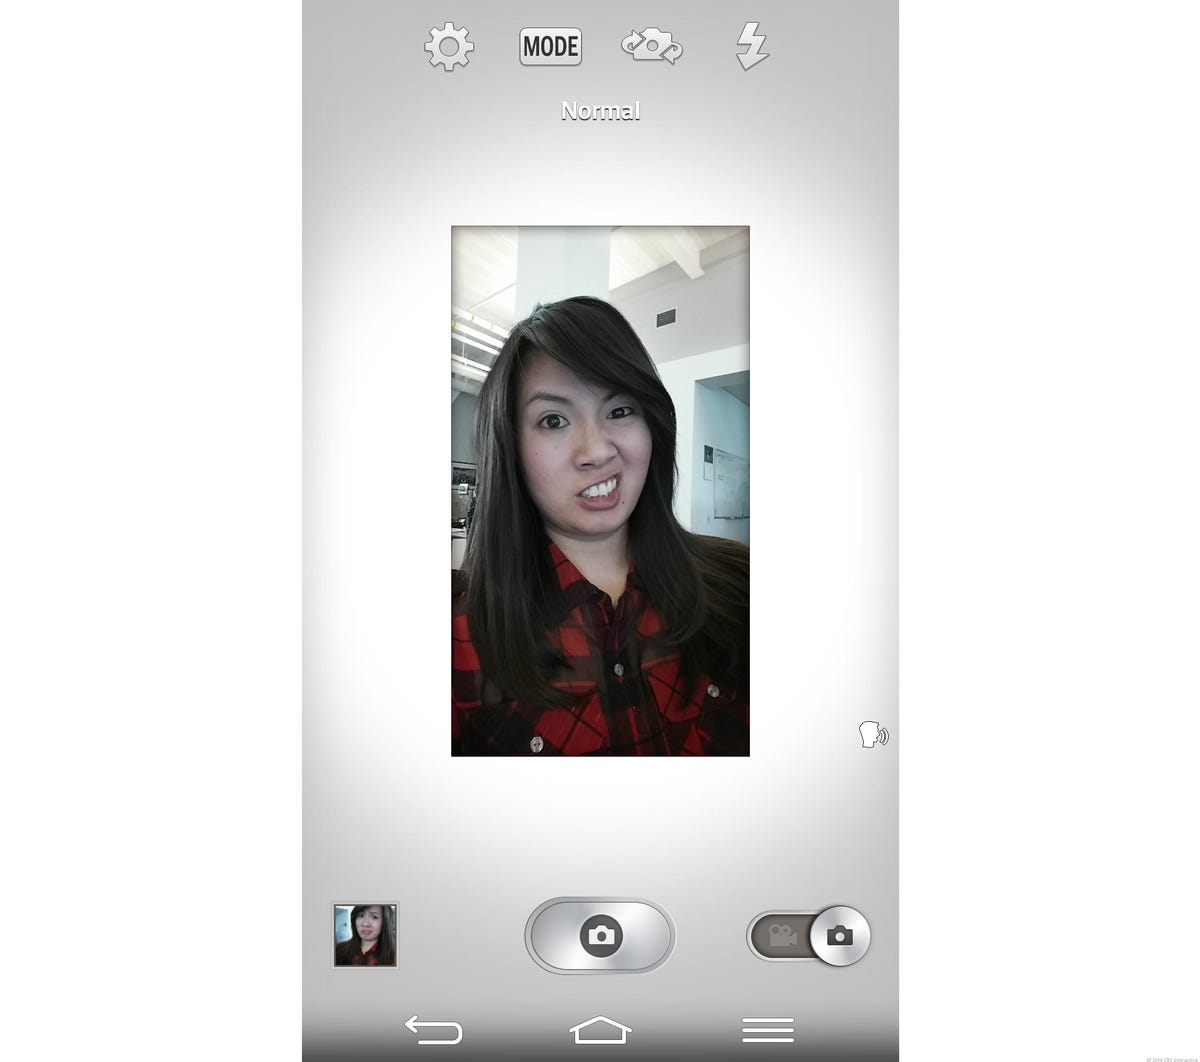 LG G Pro 2 (selfie mode)